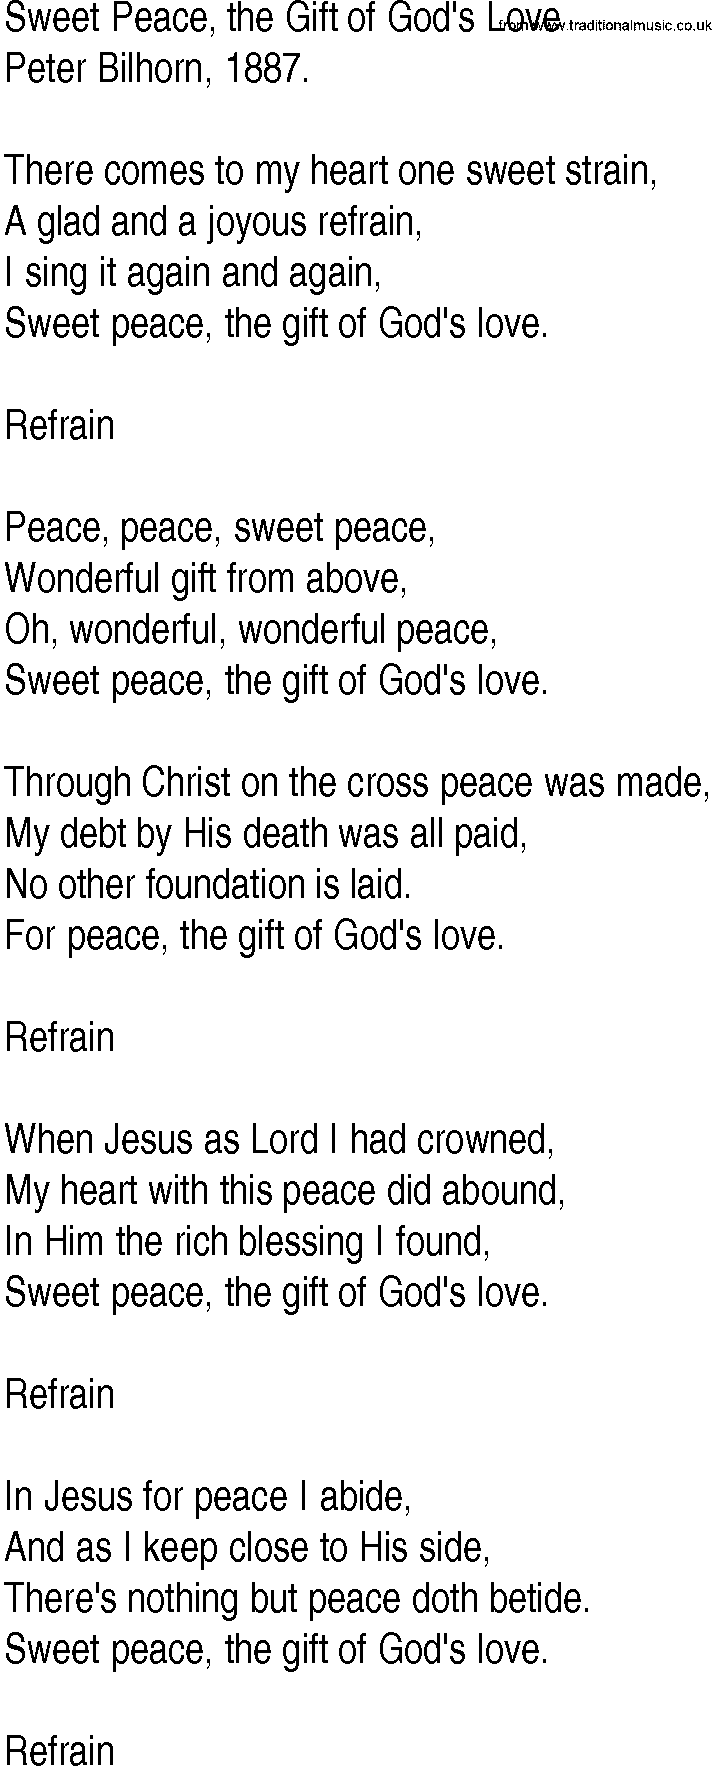 Hymn and Gospel Song: Sweet Peace, the Gift of God's Love by Peter Bilhorn lyrics